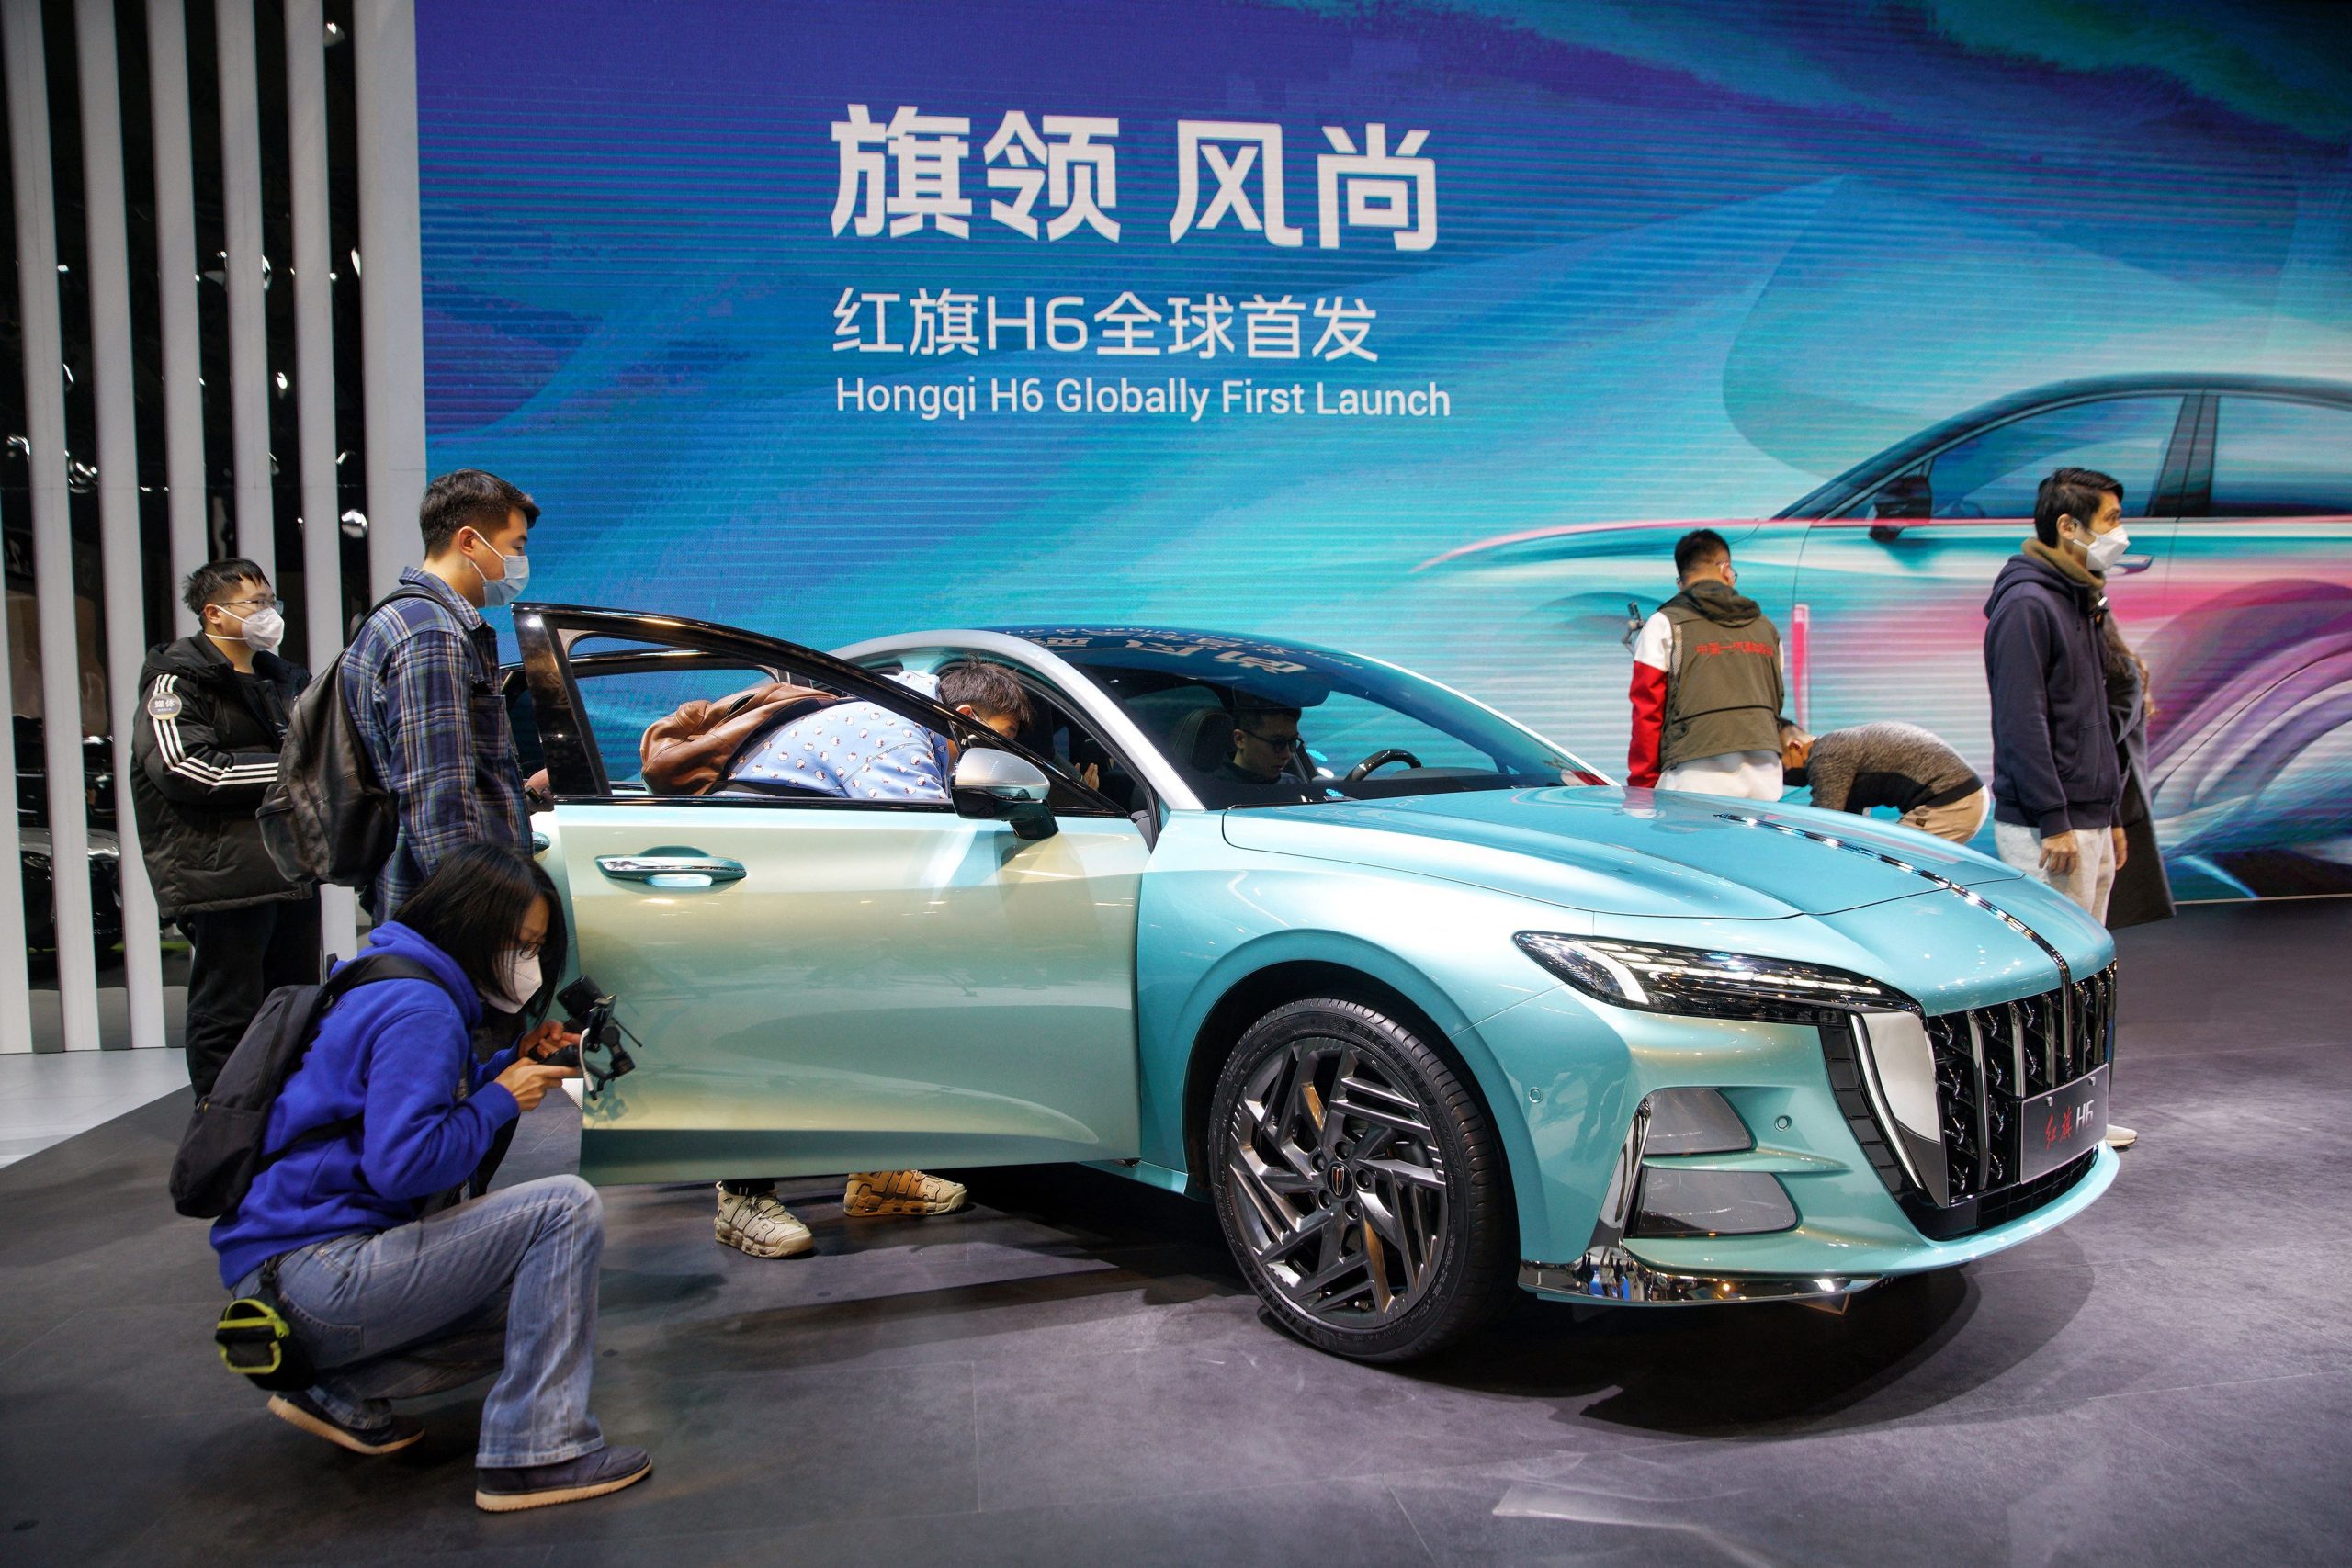 China’s Automotive Evolution: Foreign Auto Groups Embrace Local Tech